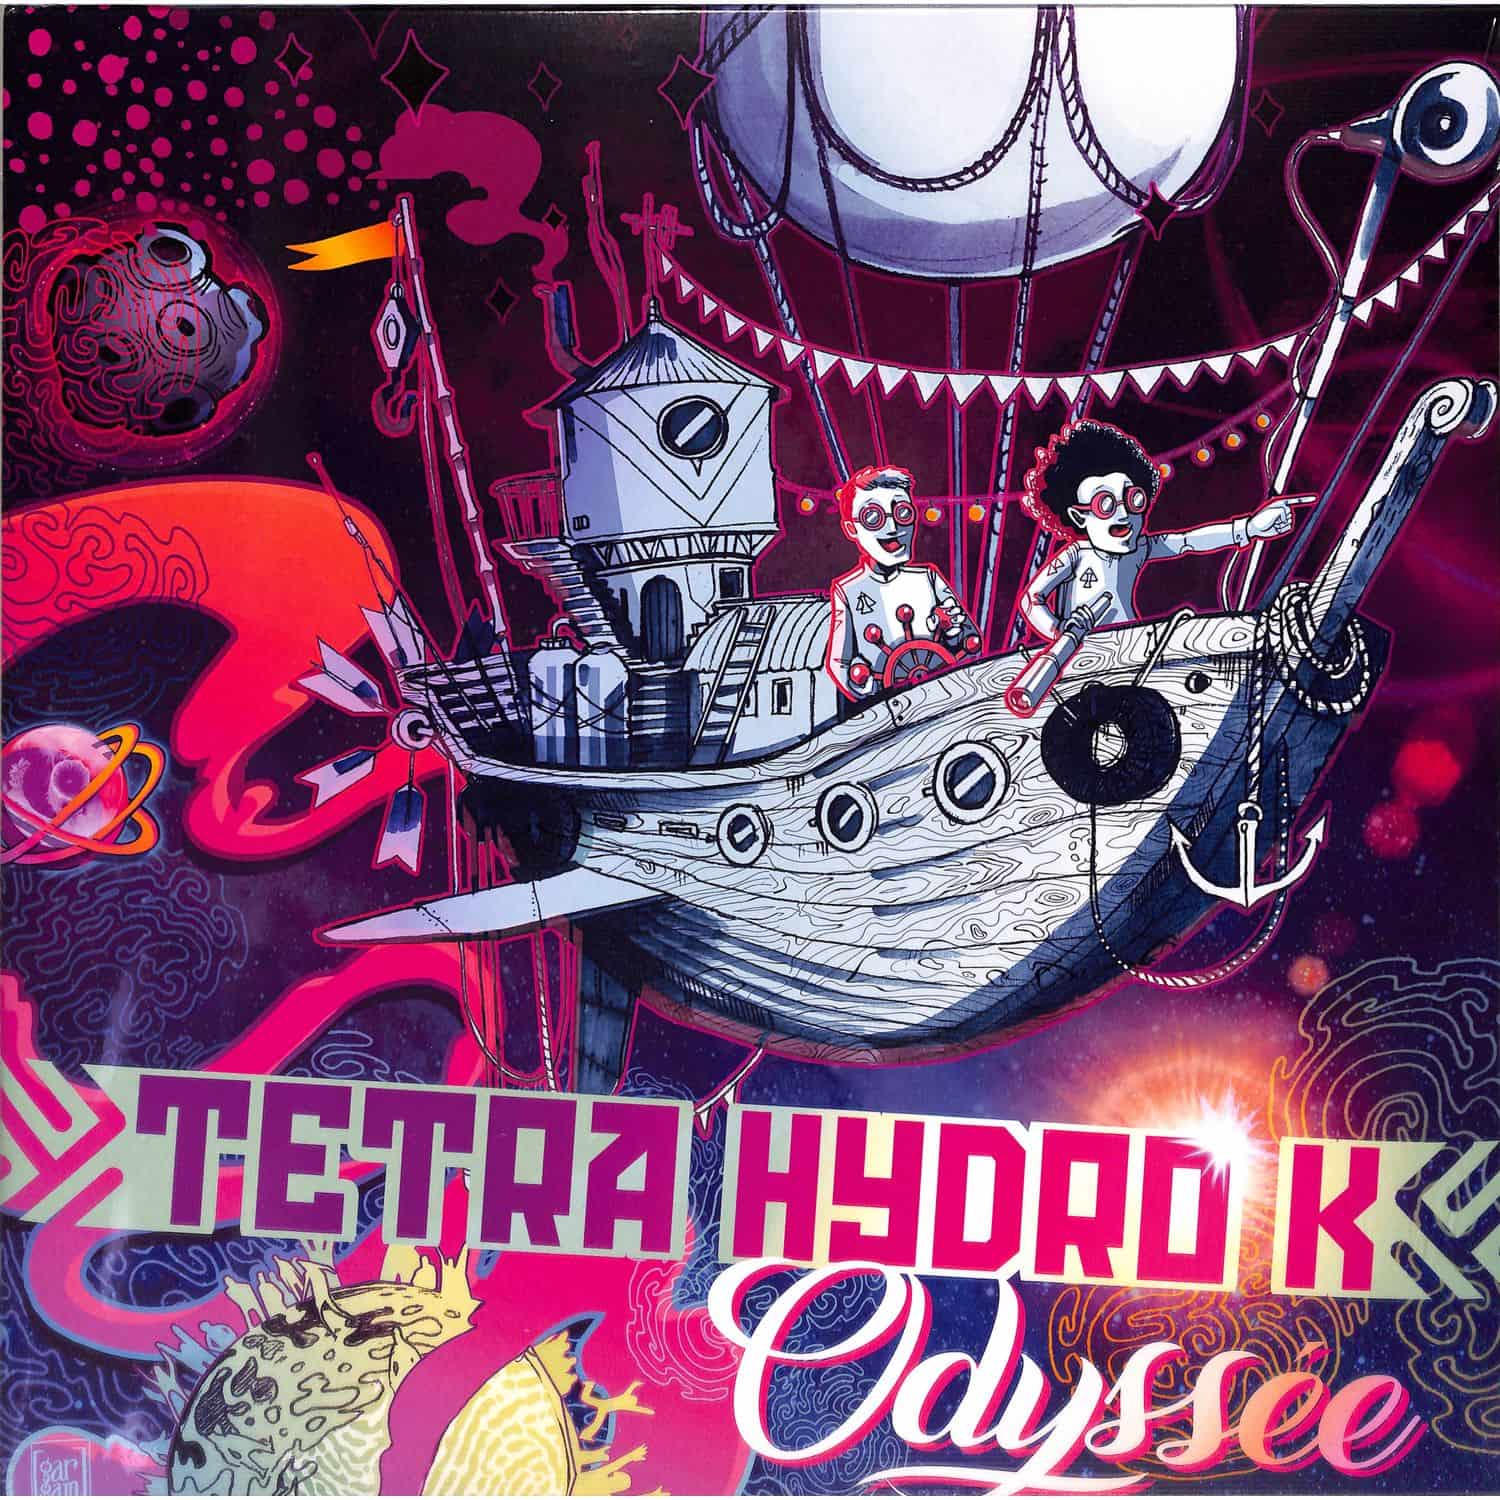 Tetra Hydro K - ODYSEE 